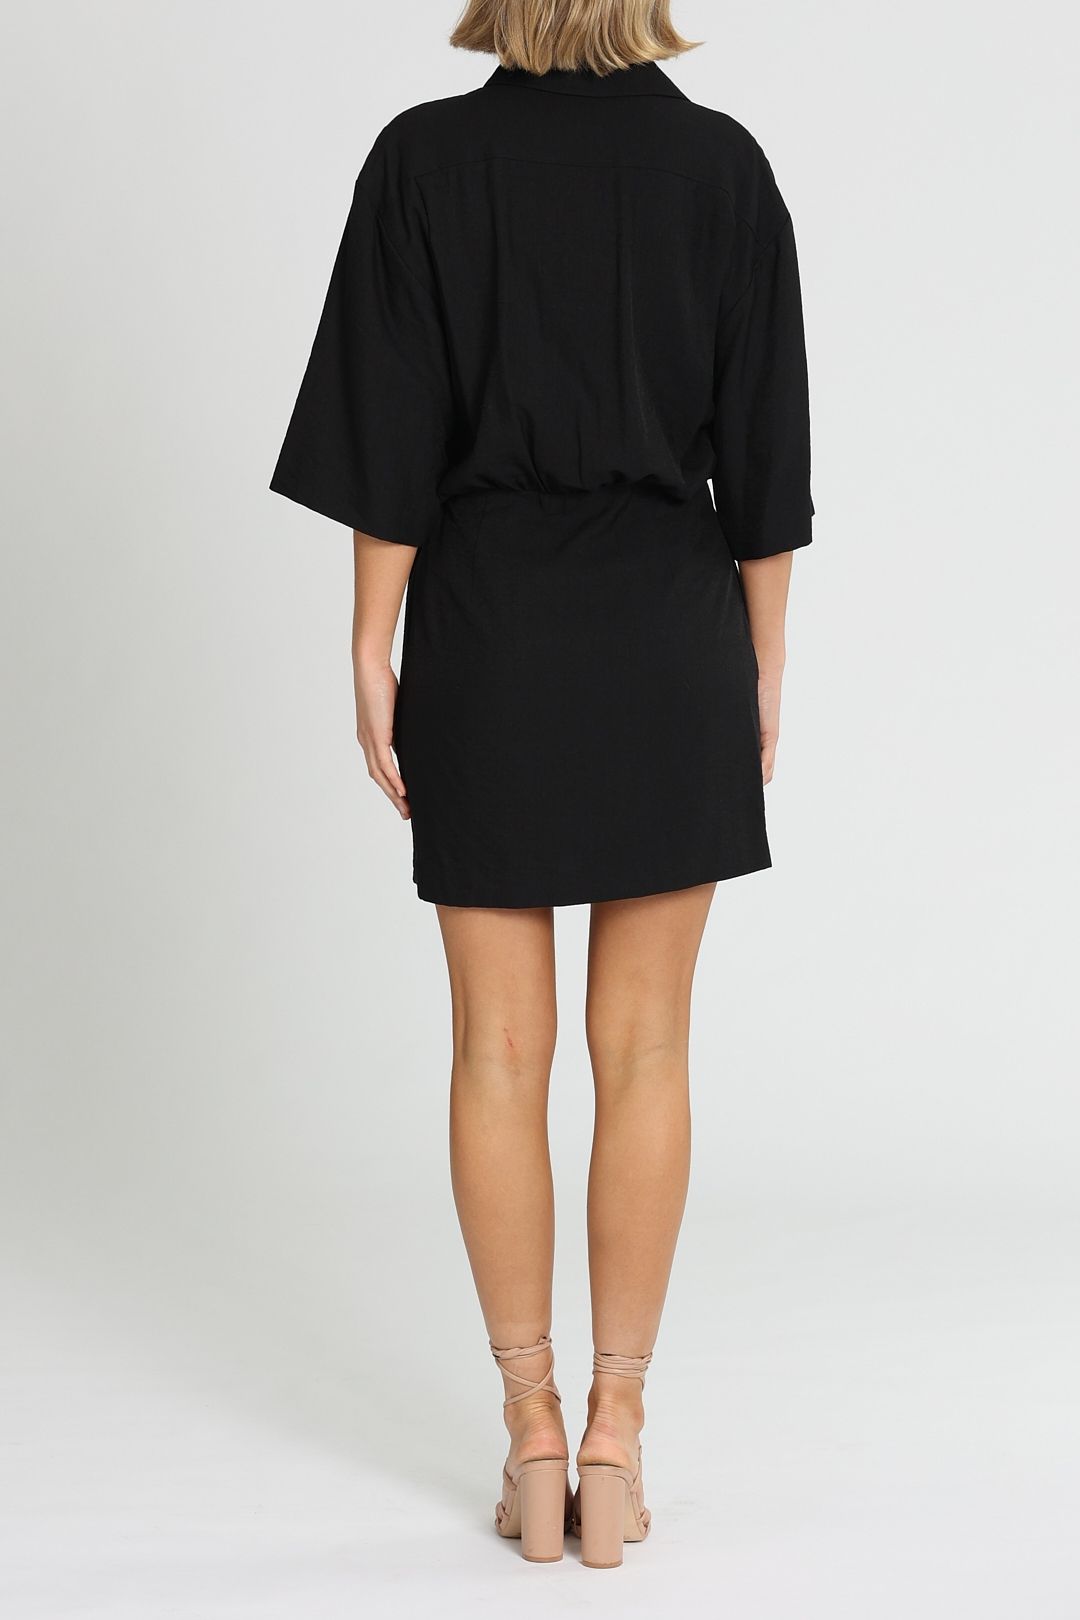 Camilla and Marc Prado Mini Dress Black Shirt Collar